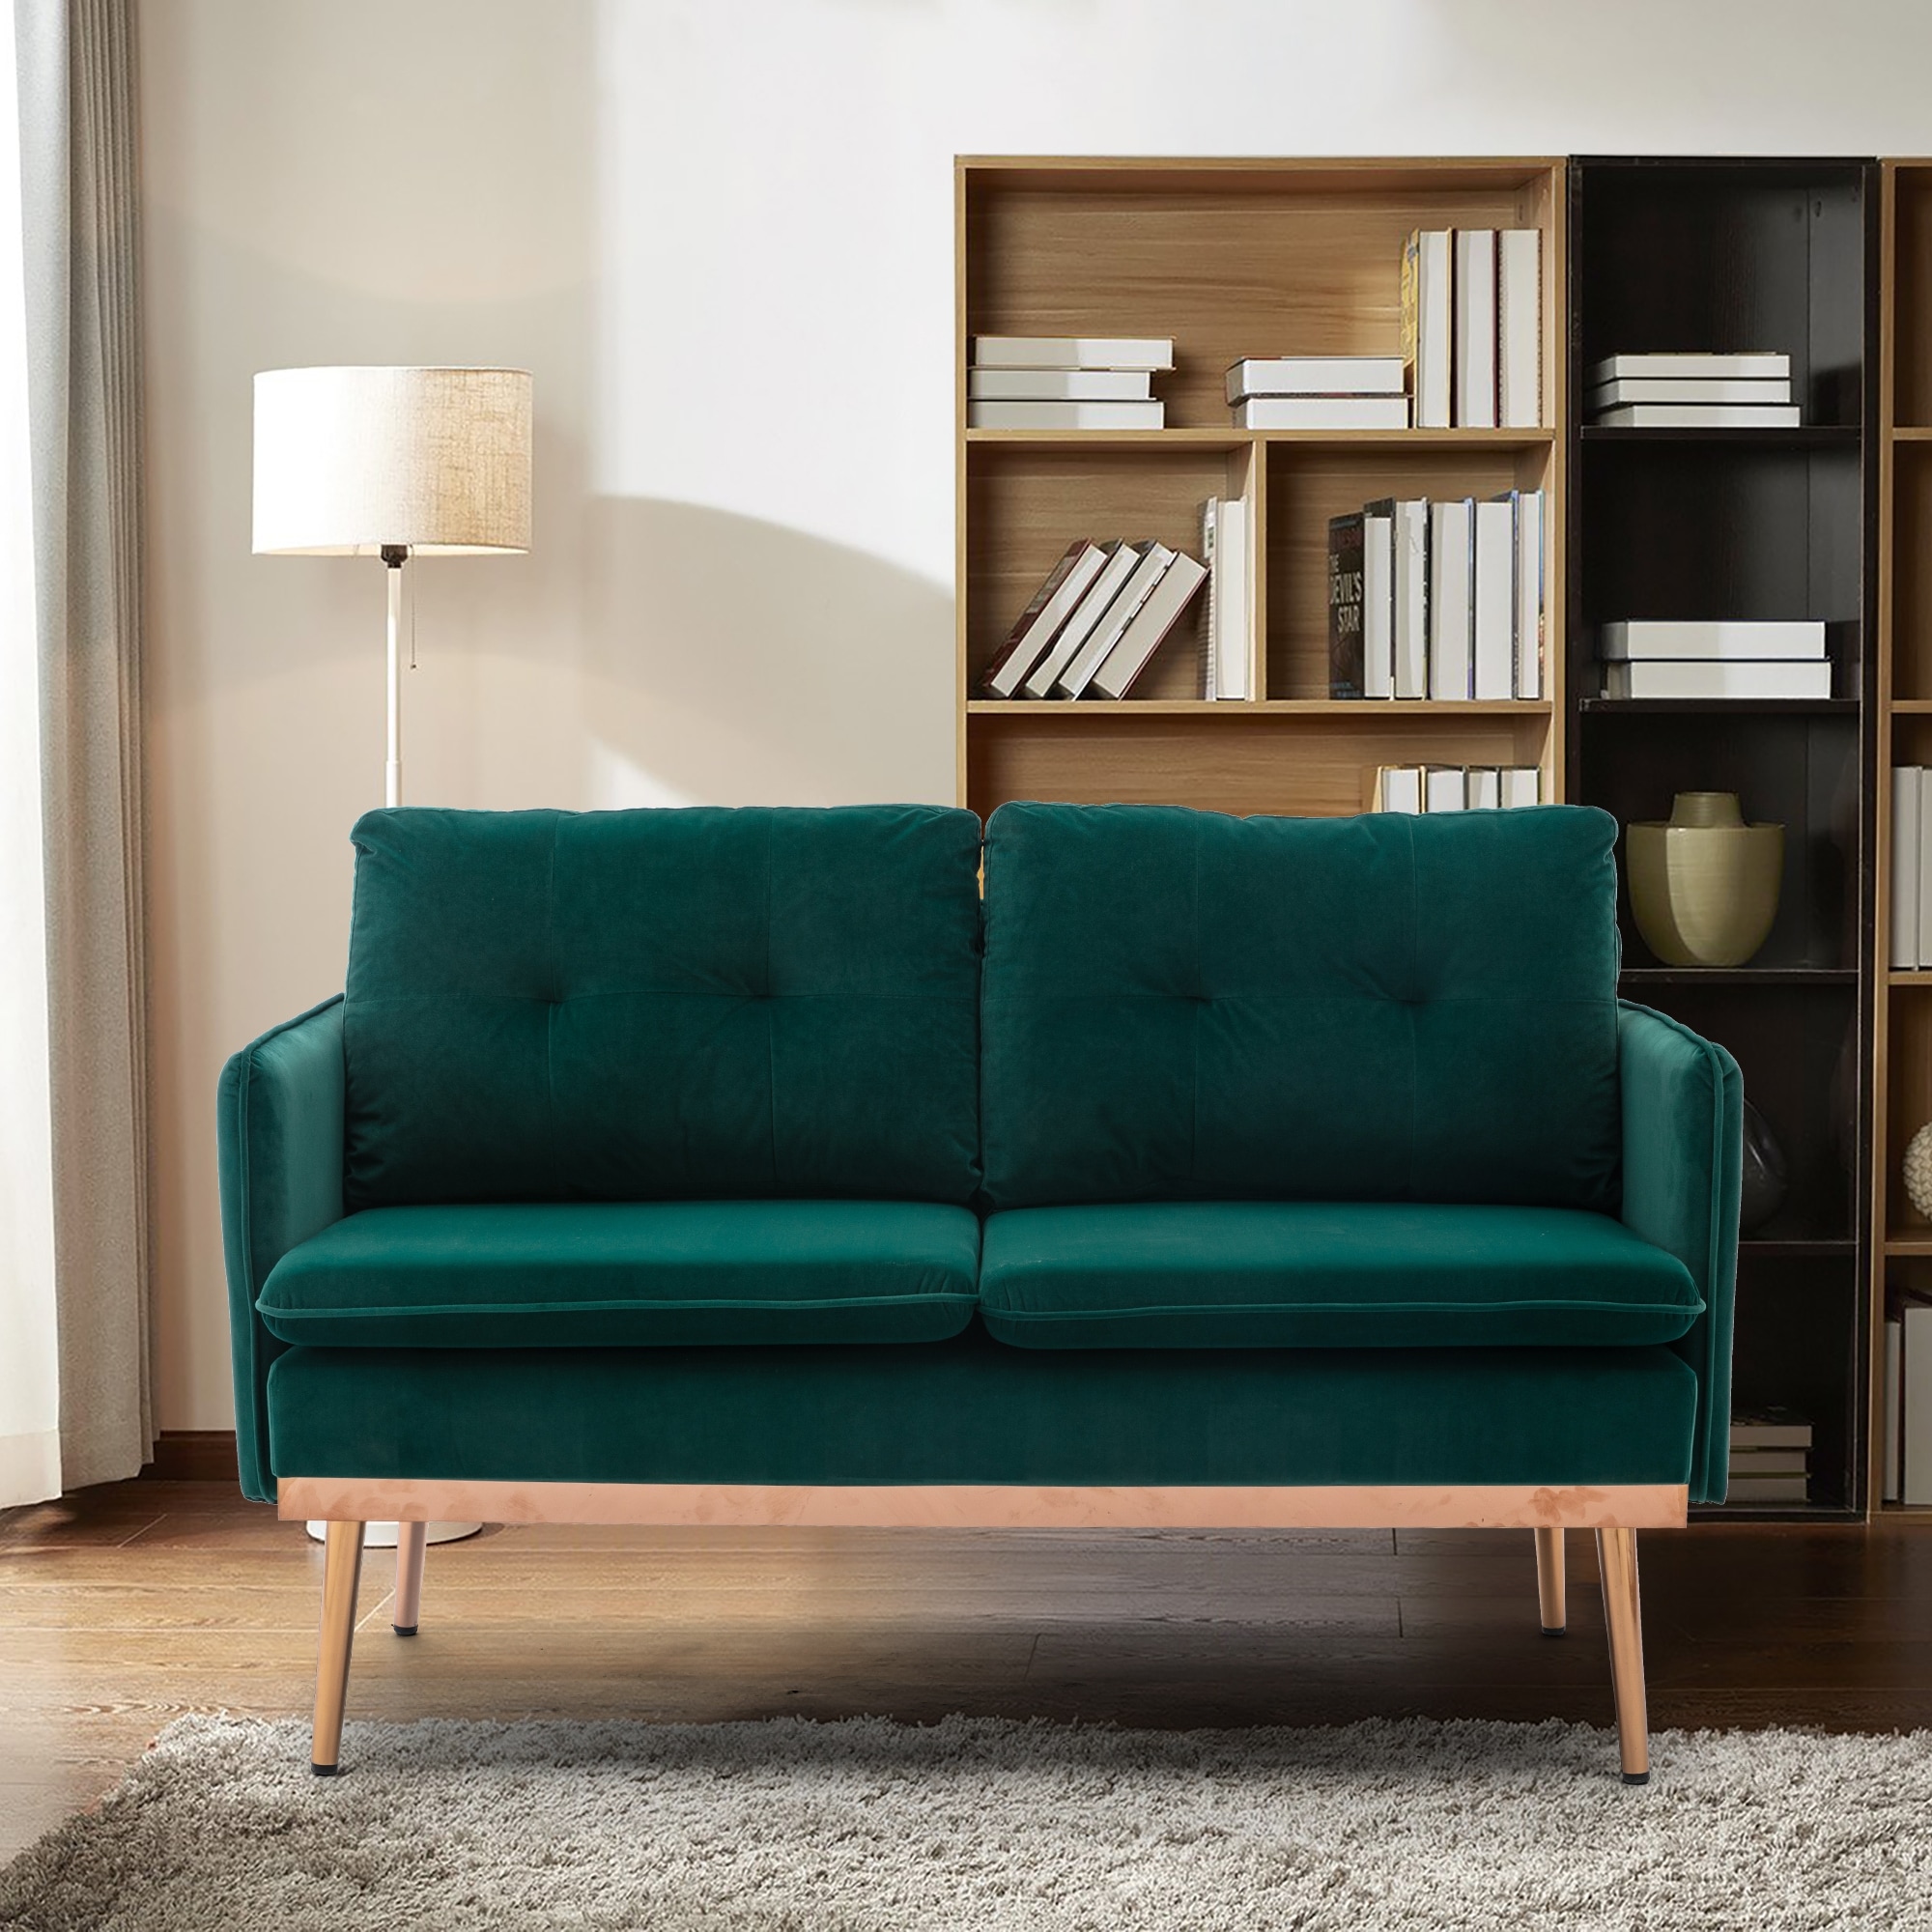 Vintage Loveseat Cushion Back Seat Velvet Upholstered Furniture Living Room Decor Sofa with Rose Golden Metal Support